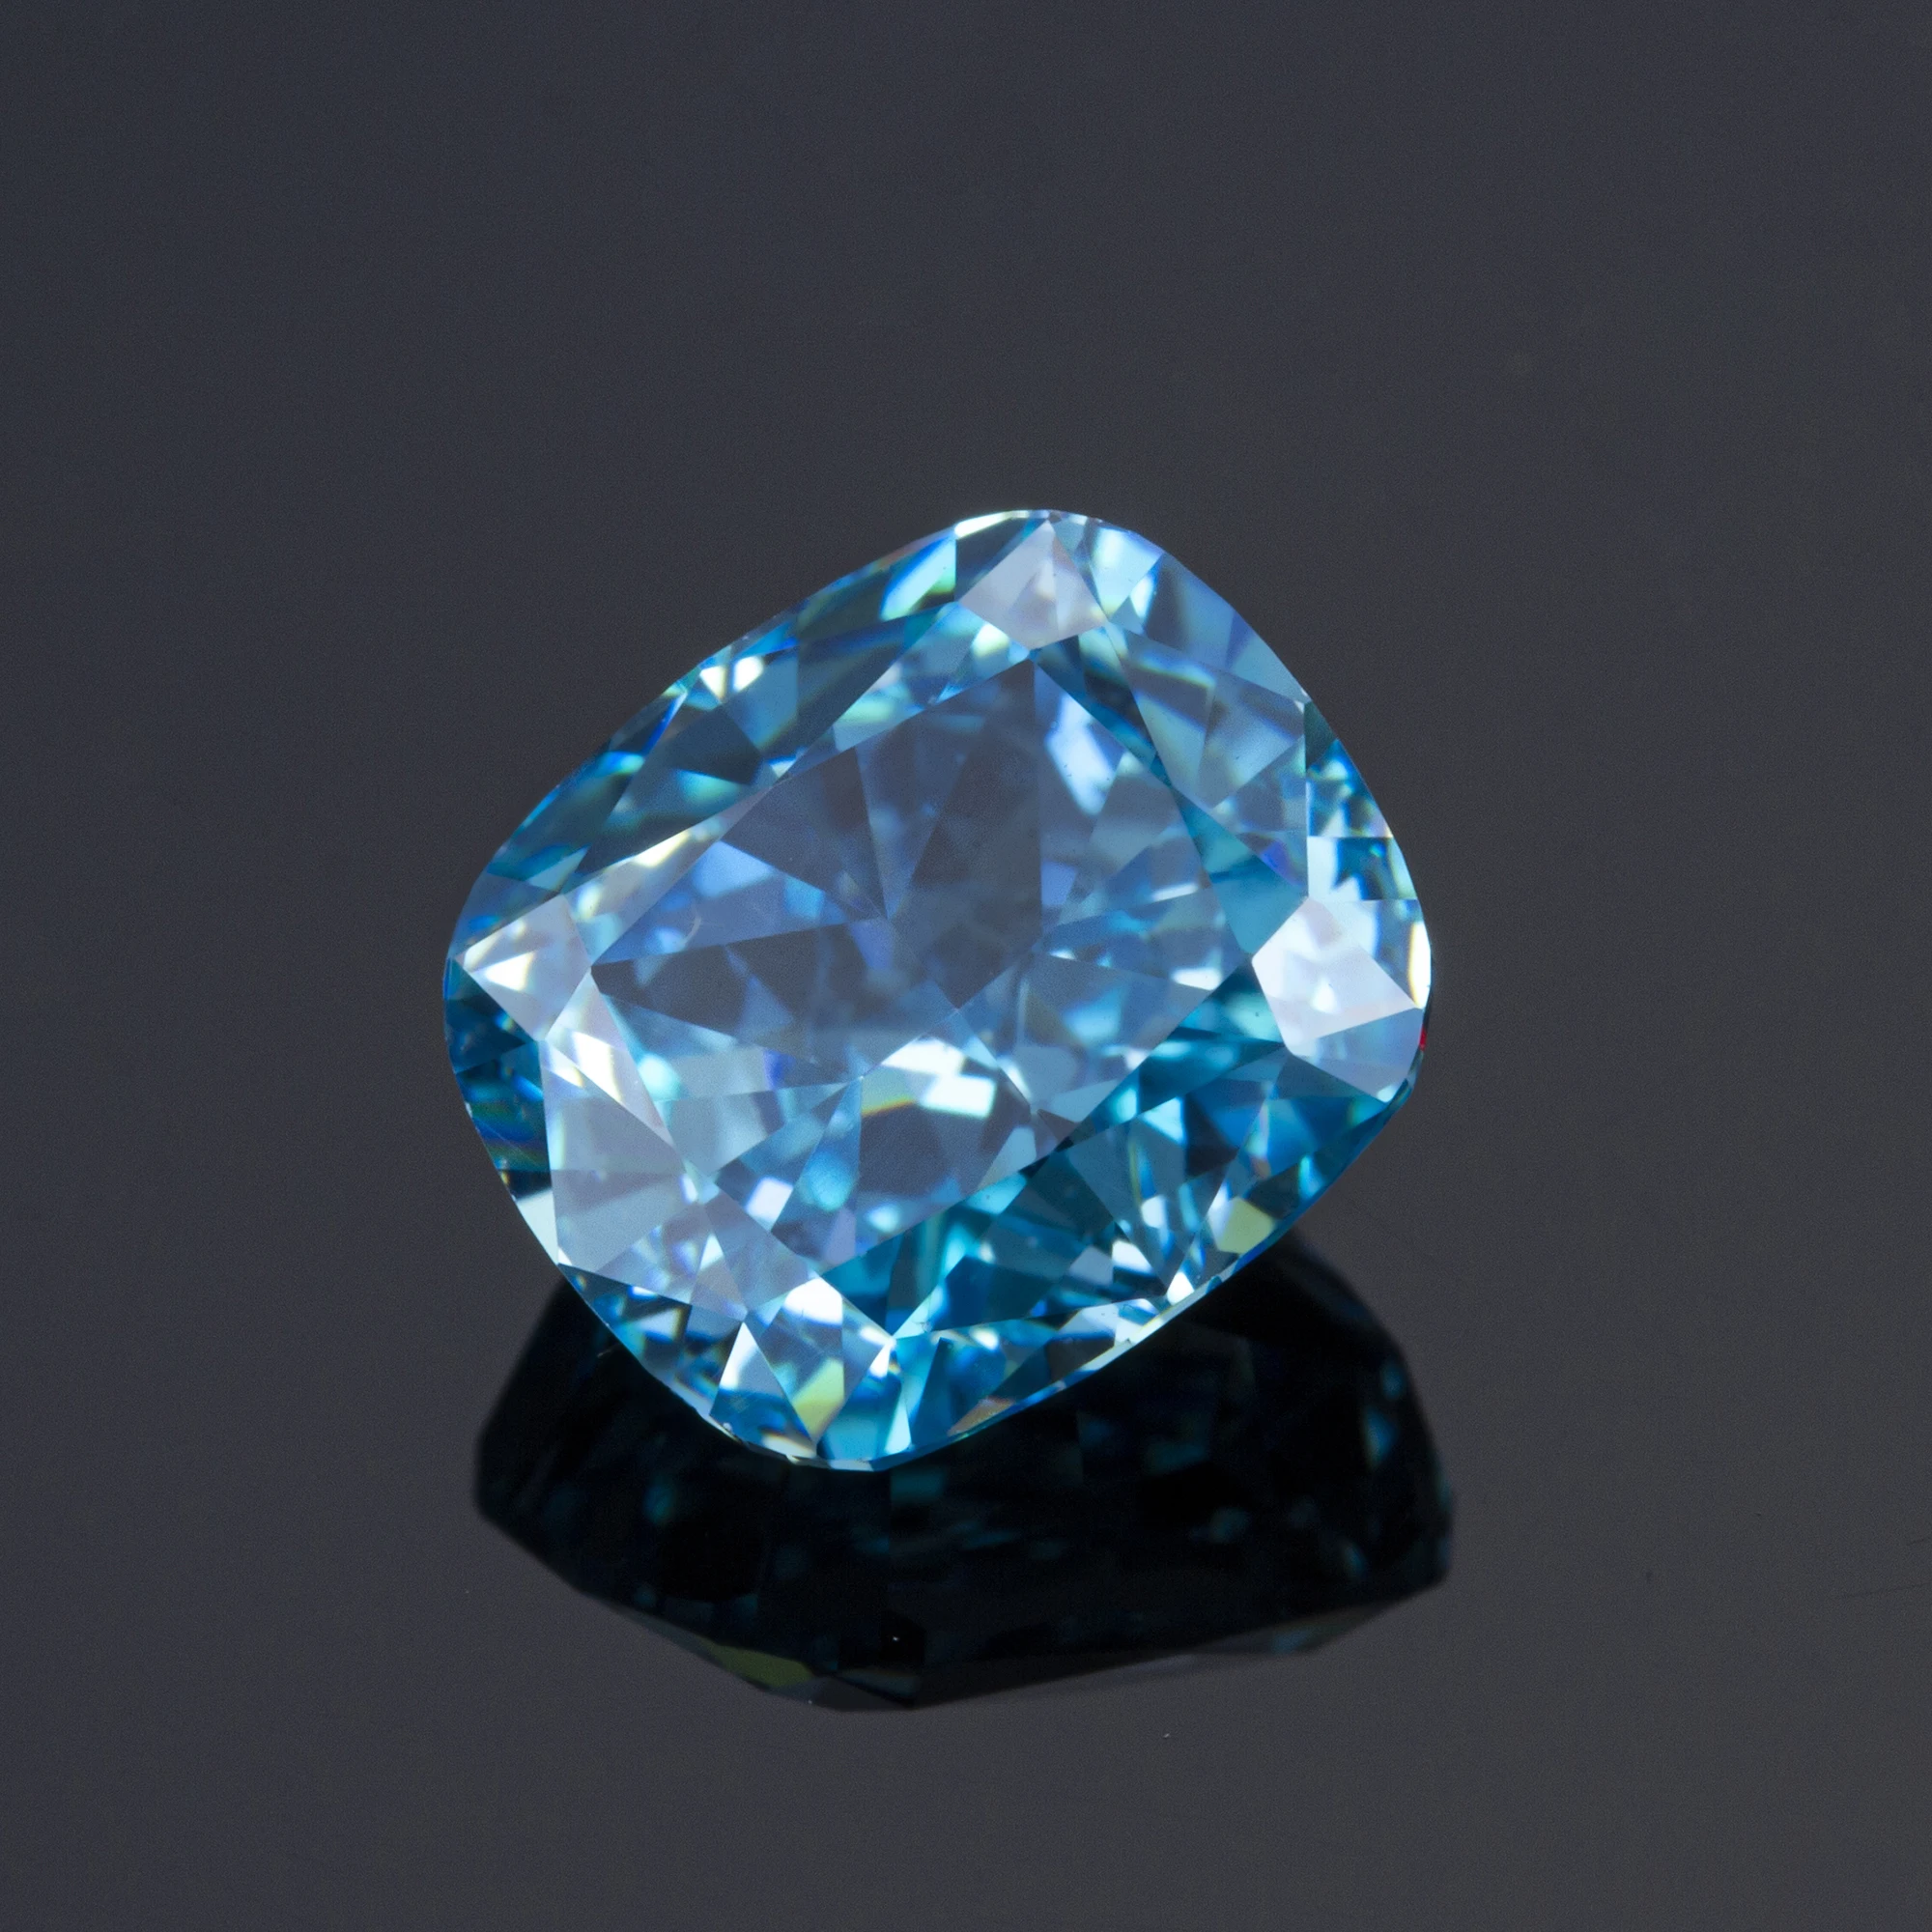 

Anster Quality Fancy Blue Synthetic Diamond CZ Loose Gemstone For Jewelry Making 2021 ZIRCON Piedras Preciosas Sueltas, Fancy blue diamond